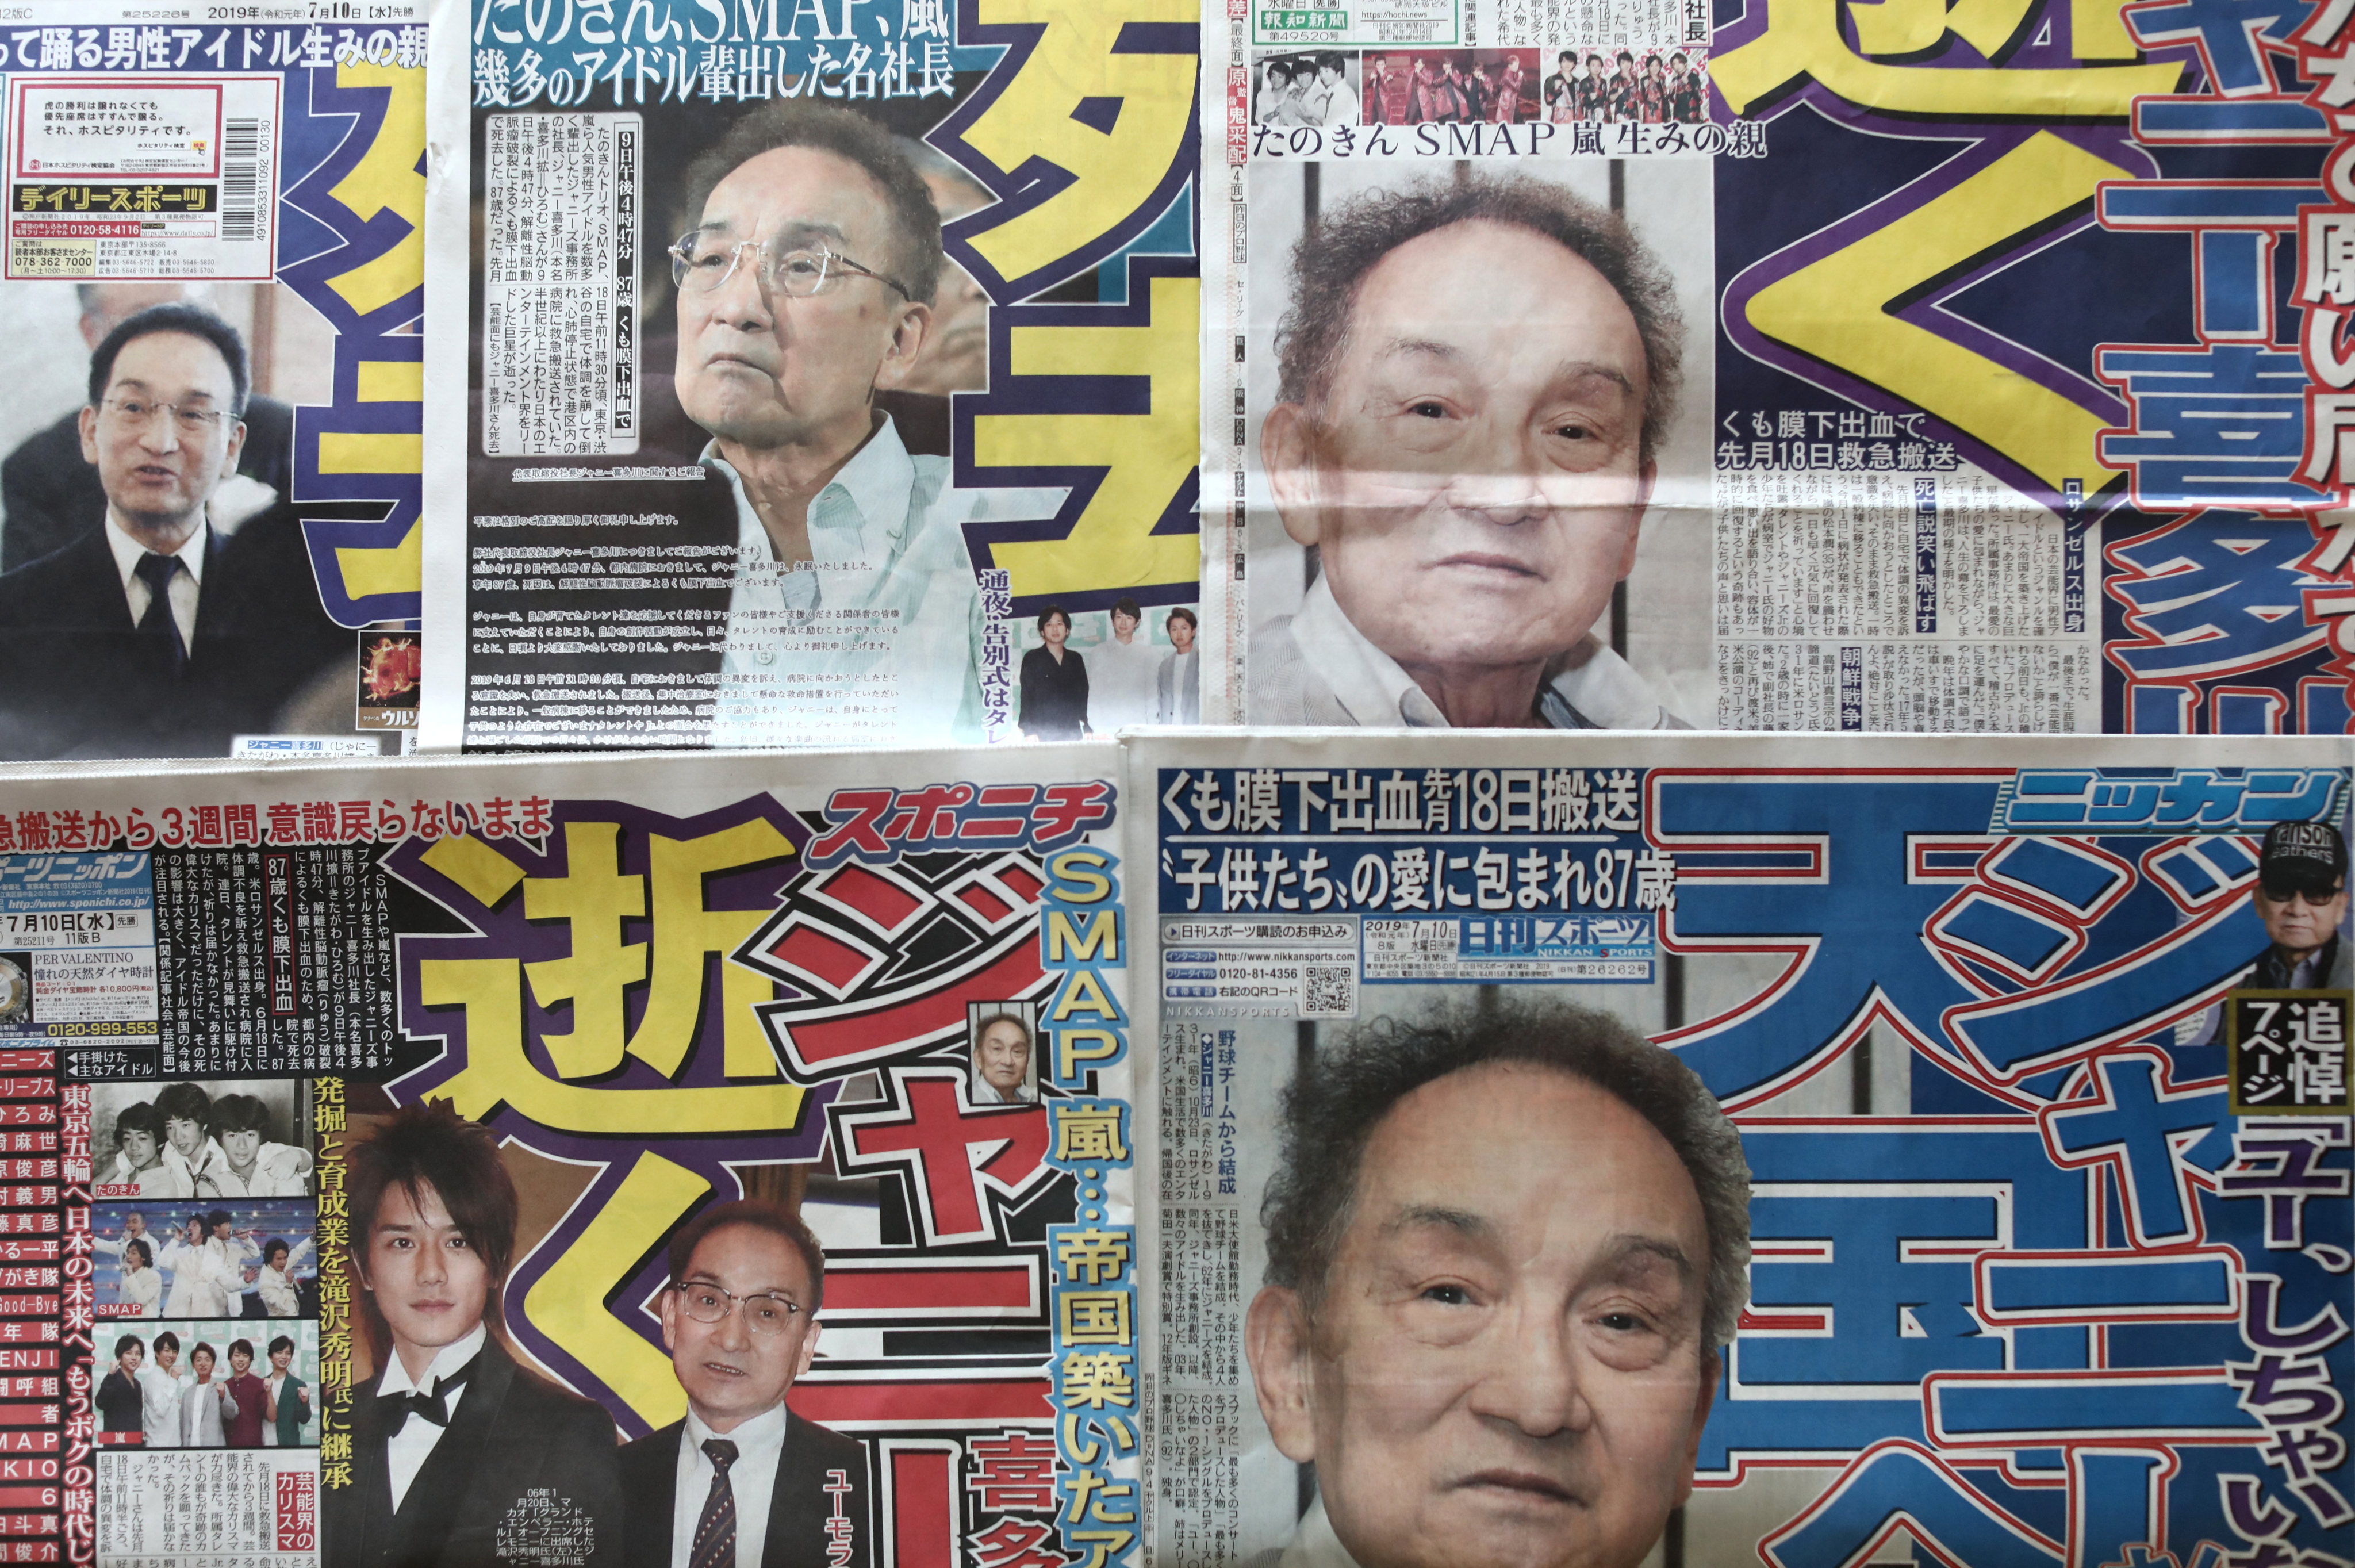 Japannxxx - Japan sex predator Johnny Kitagawa's talent agency faces spiralling crisis  amid growing anger, advertiser boycott | South China Morning Post